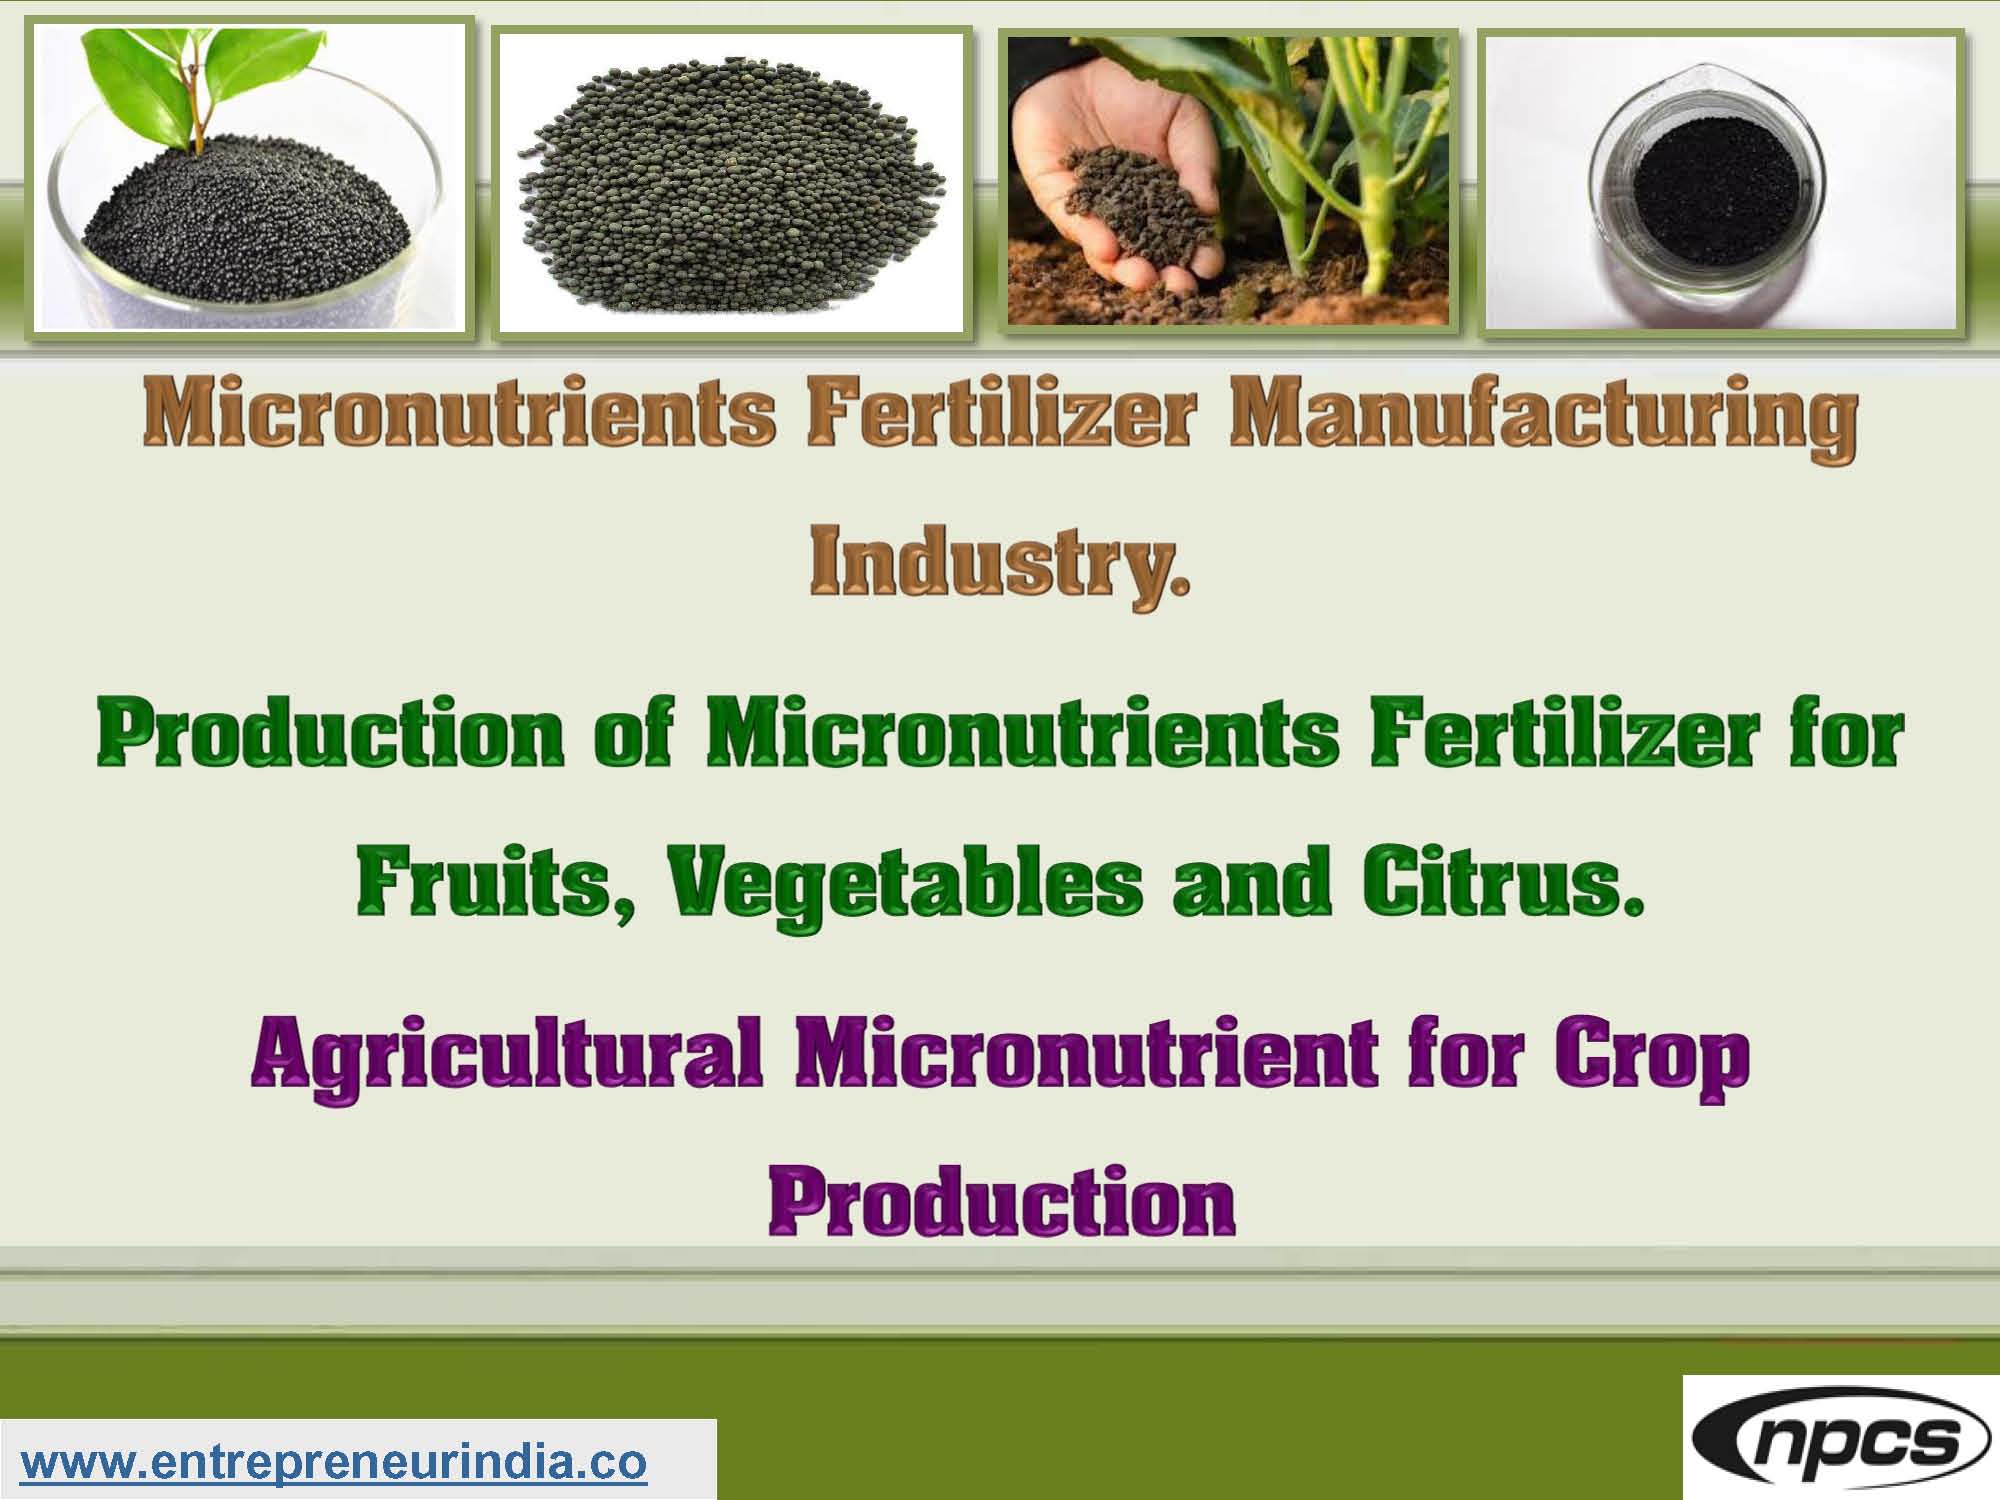 Micronutrients Fertilizer Manufacturing Industry